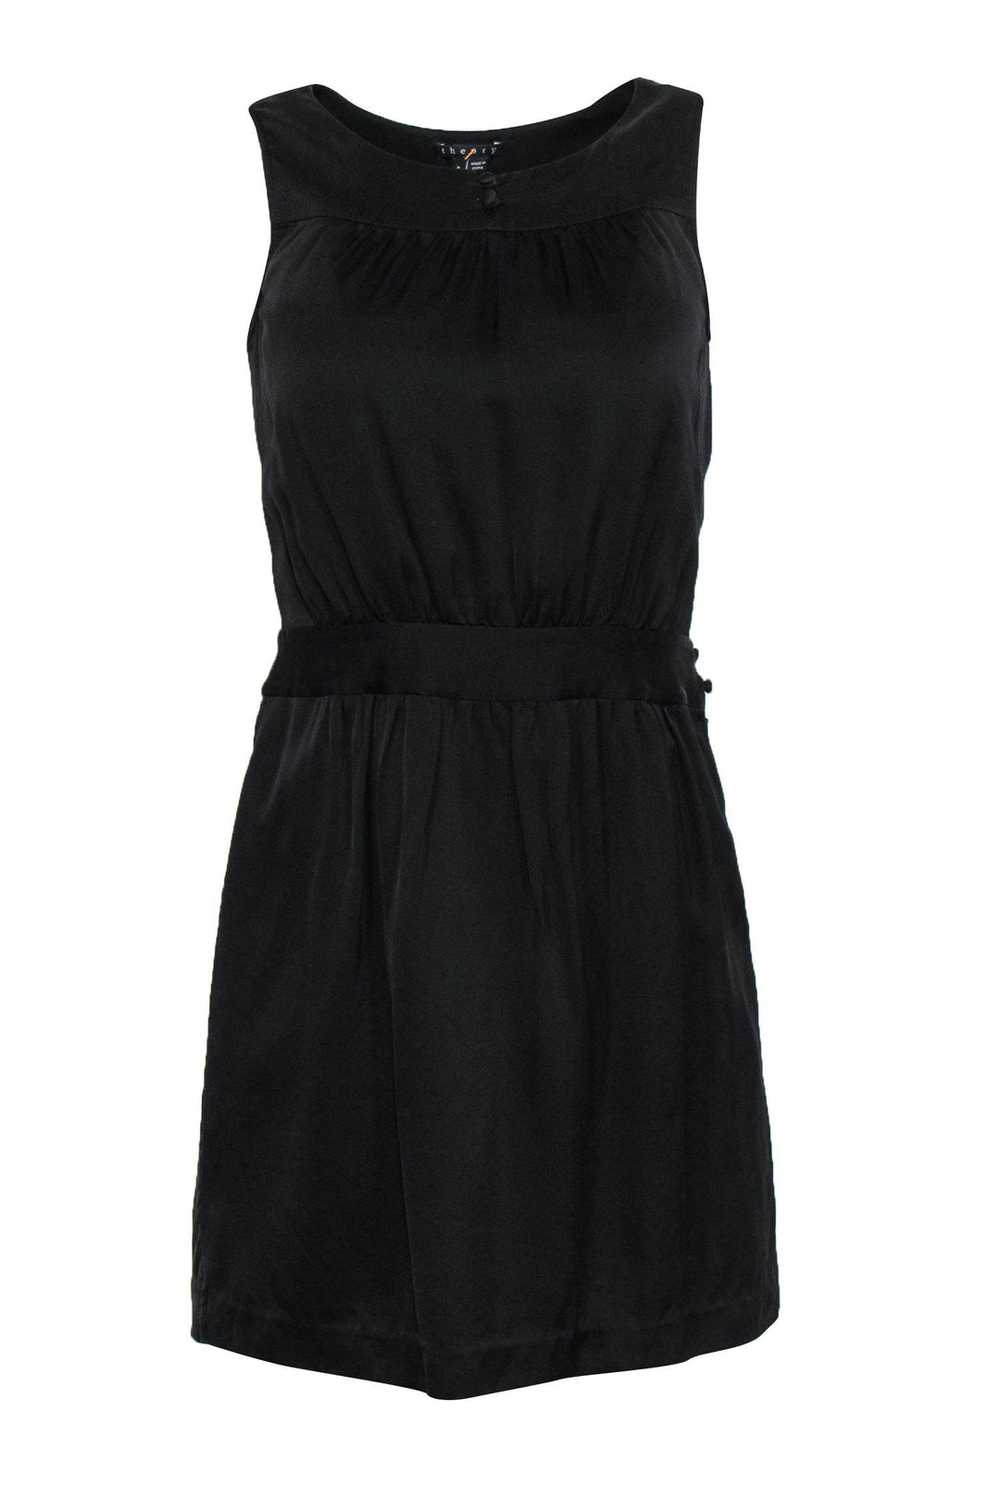 Theory - Black Silk Fitted Mini Dress Sz 0 - image 1